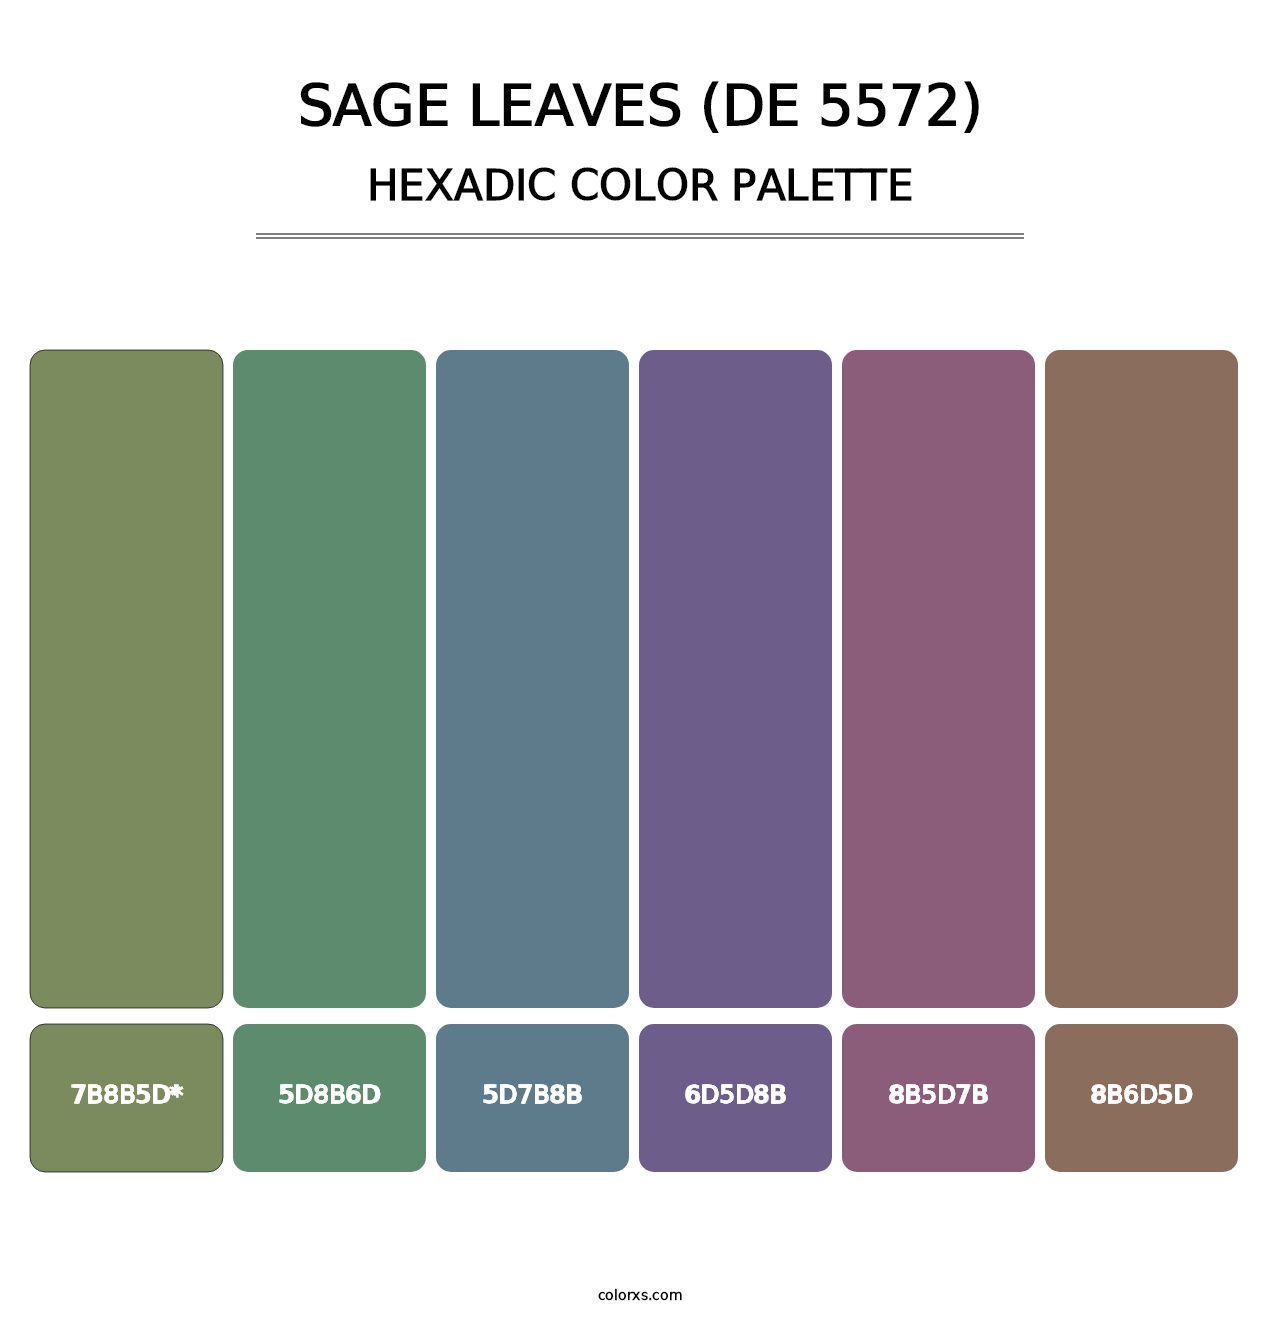 Sage Leaves (DE 5572) - Hexadic Color Palette